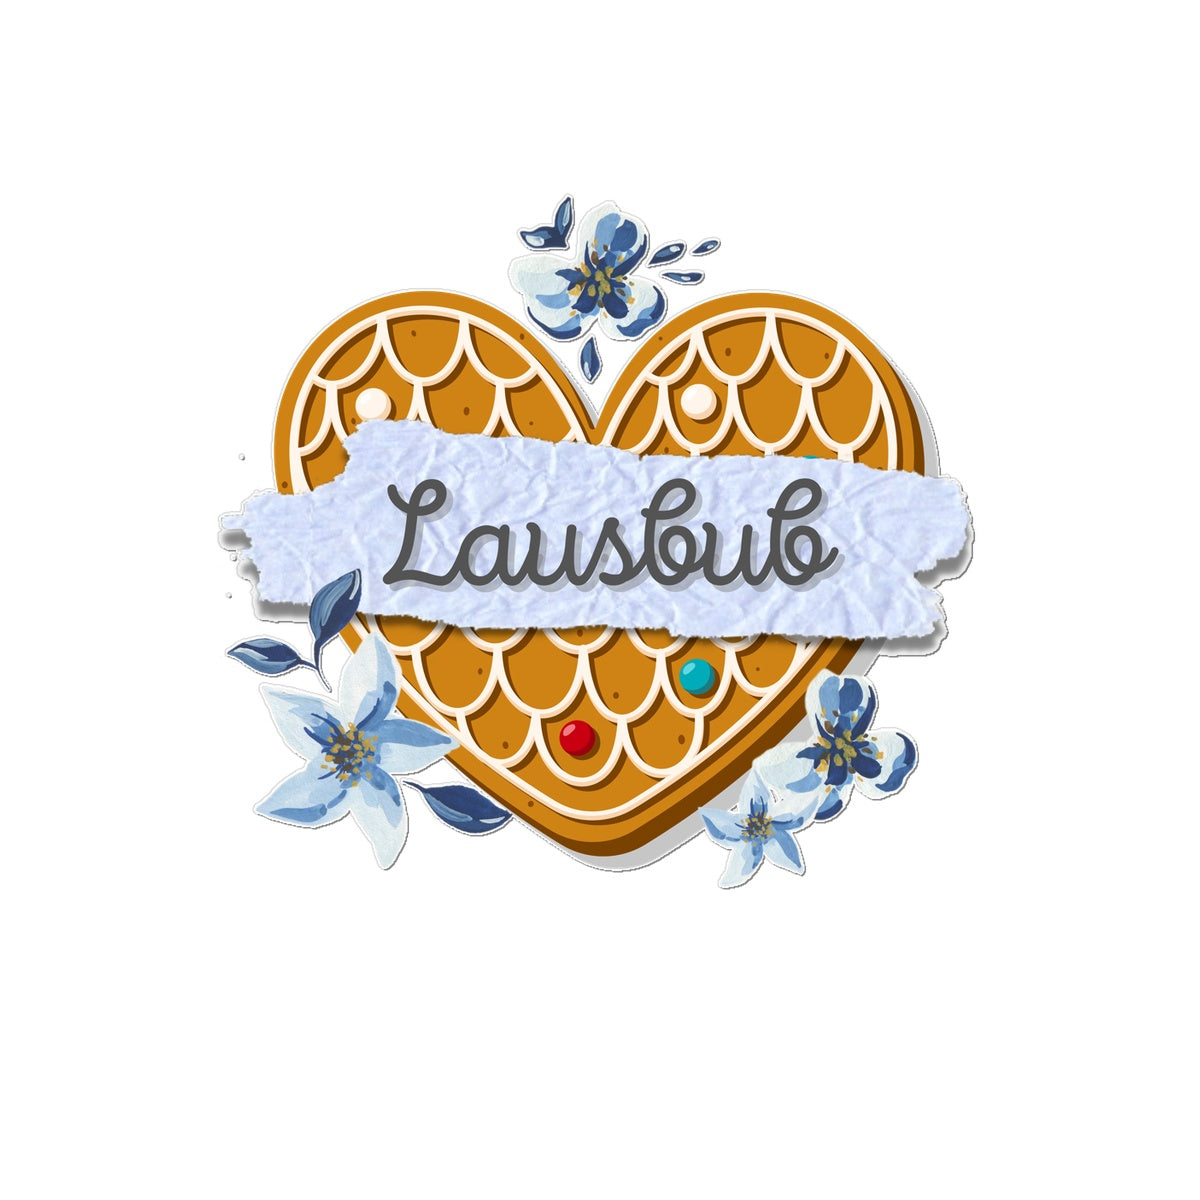 Temporary Tattoo, Bavarian Retro Gingerbread heart "Lausbub" with florals, blue - 2 sizes - Bavari Shop - Bavarian Outfits, Dirndl, Lederhosen & Accessories